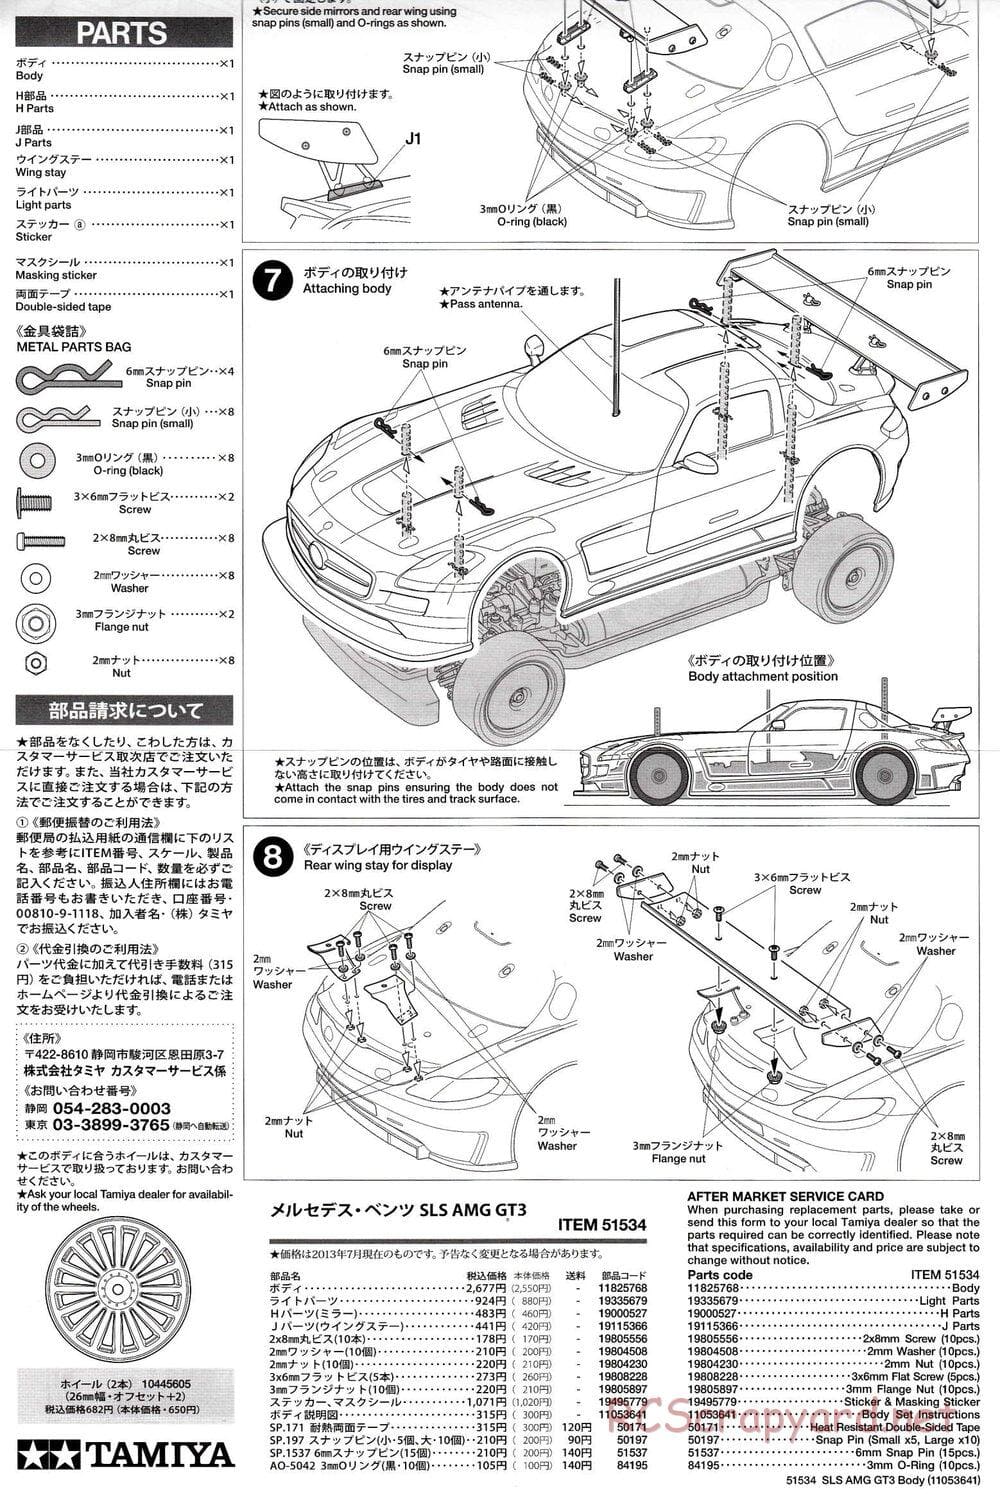 Tamiya - Mercedes Benz SLS AMG GT3 - TT-02 Chassis - Body Manual - Page 4